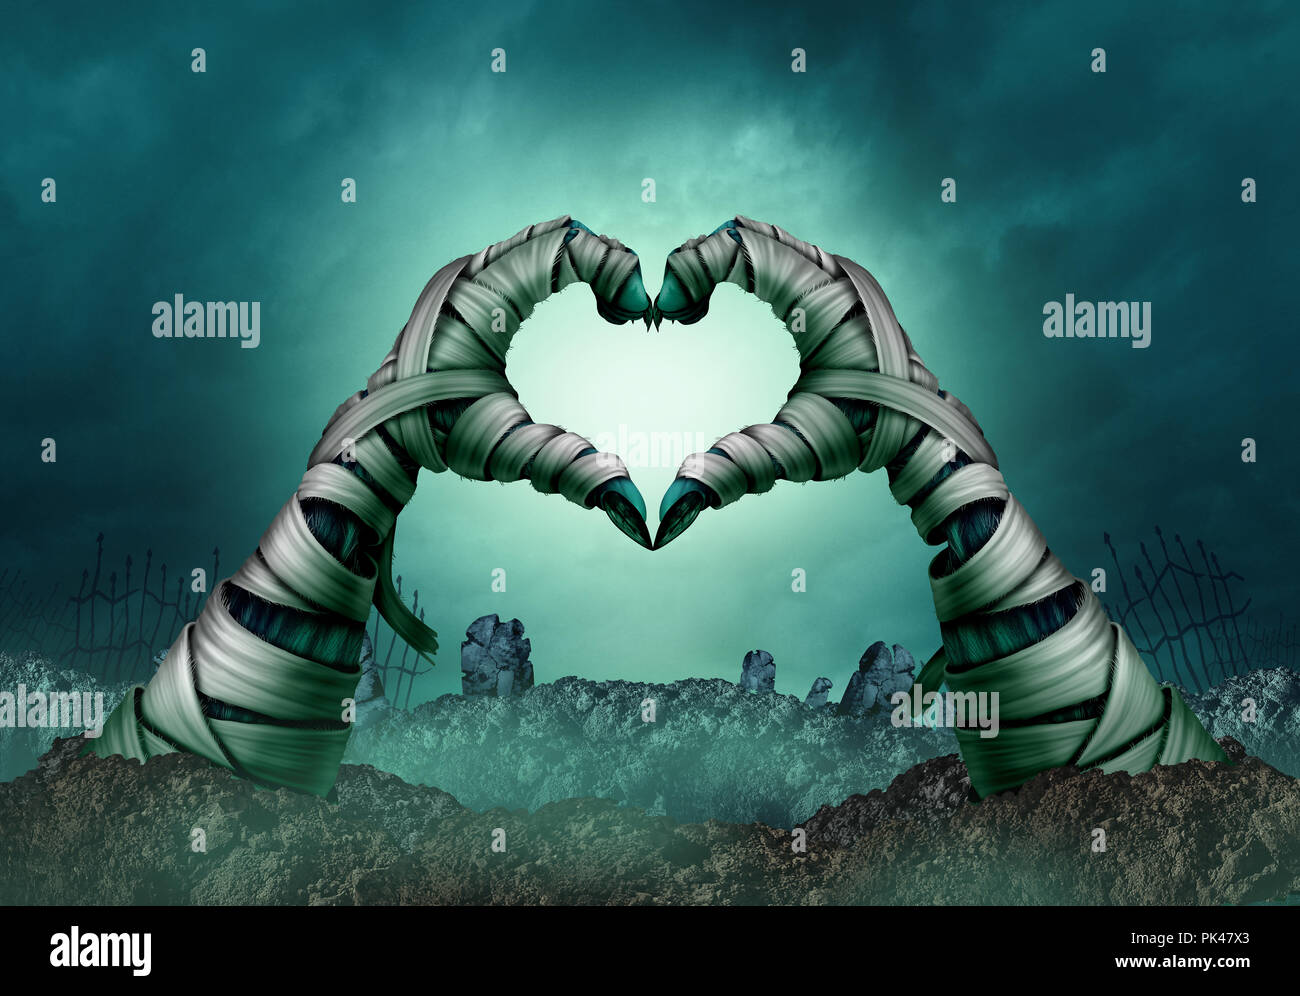 Mummy Hand Heart Shape In A Creepy Night Graveyard Background As